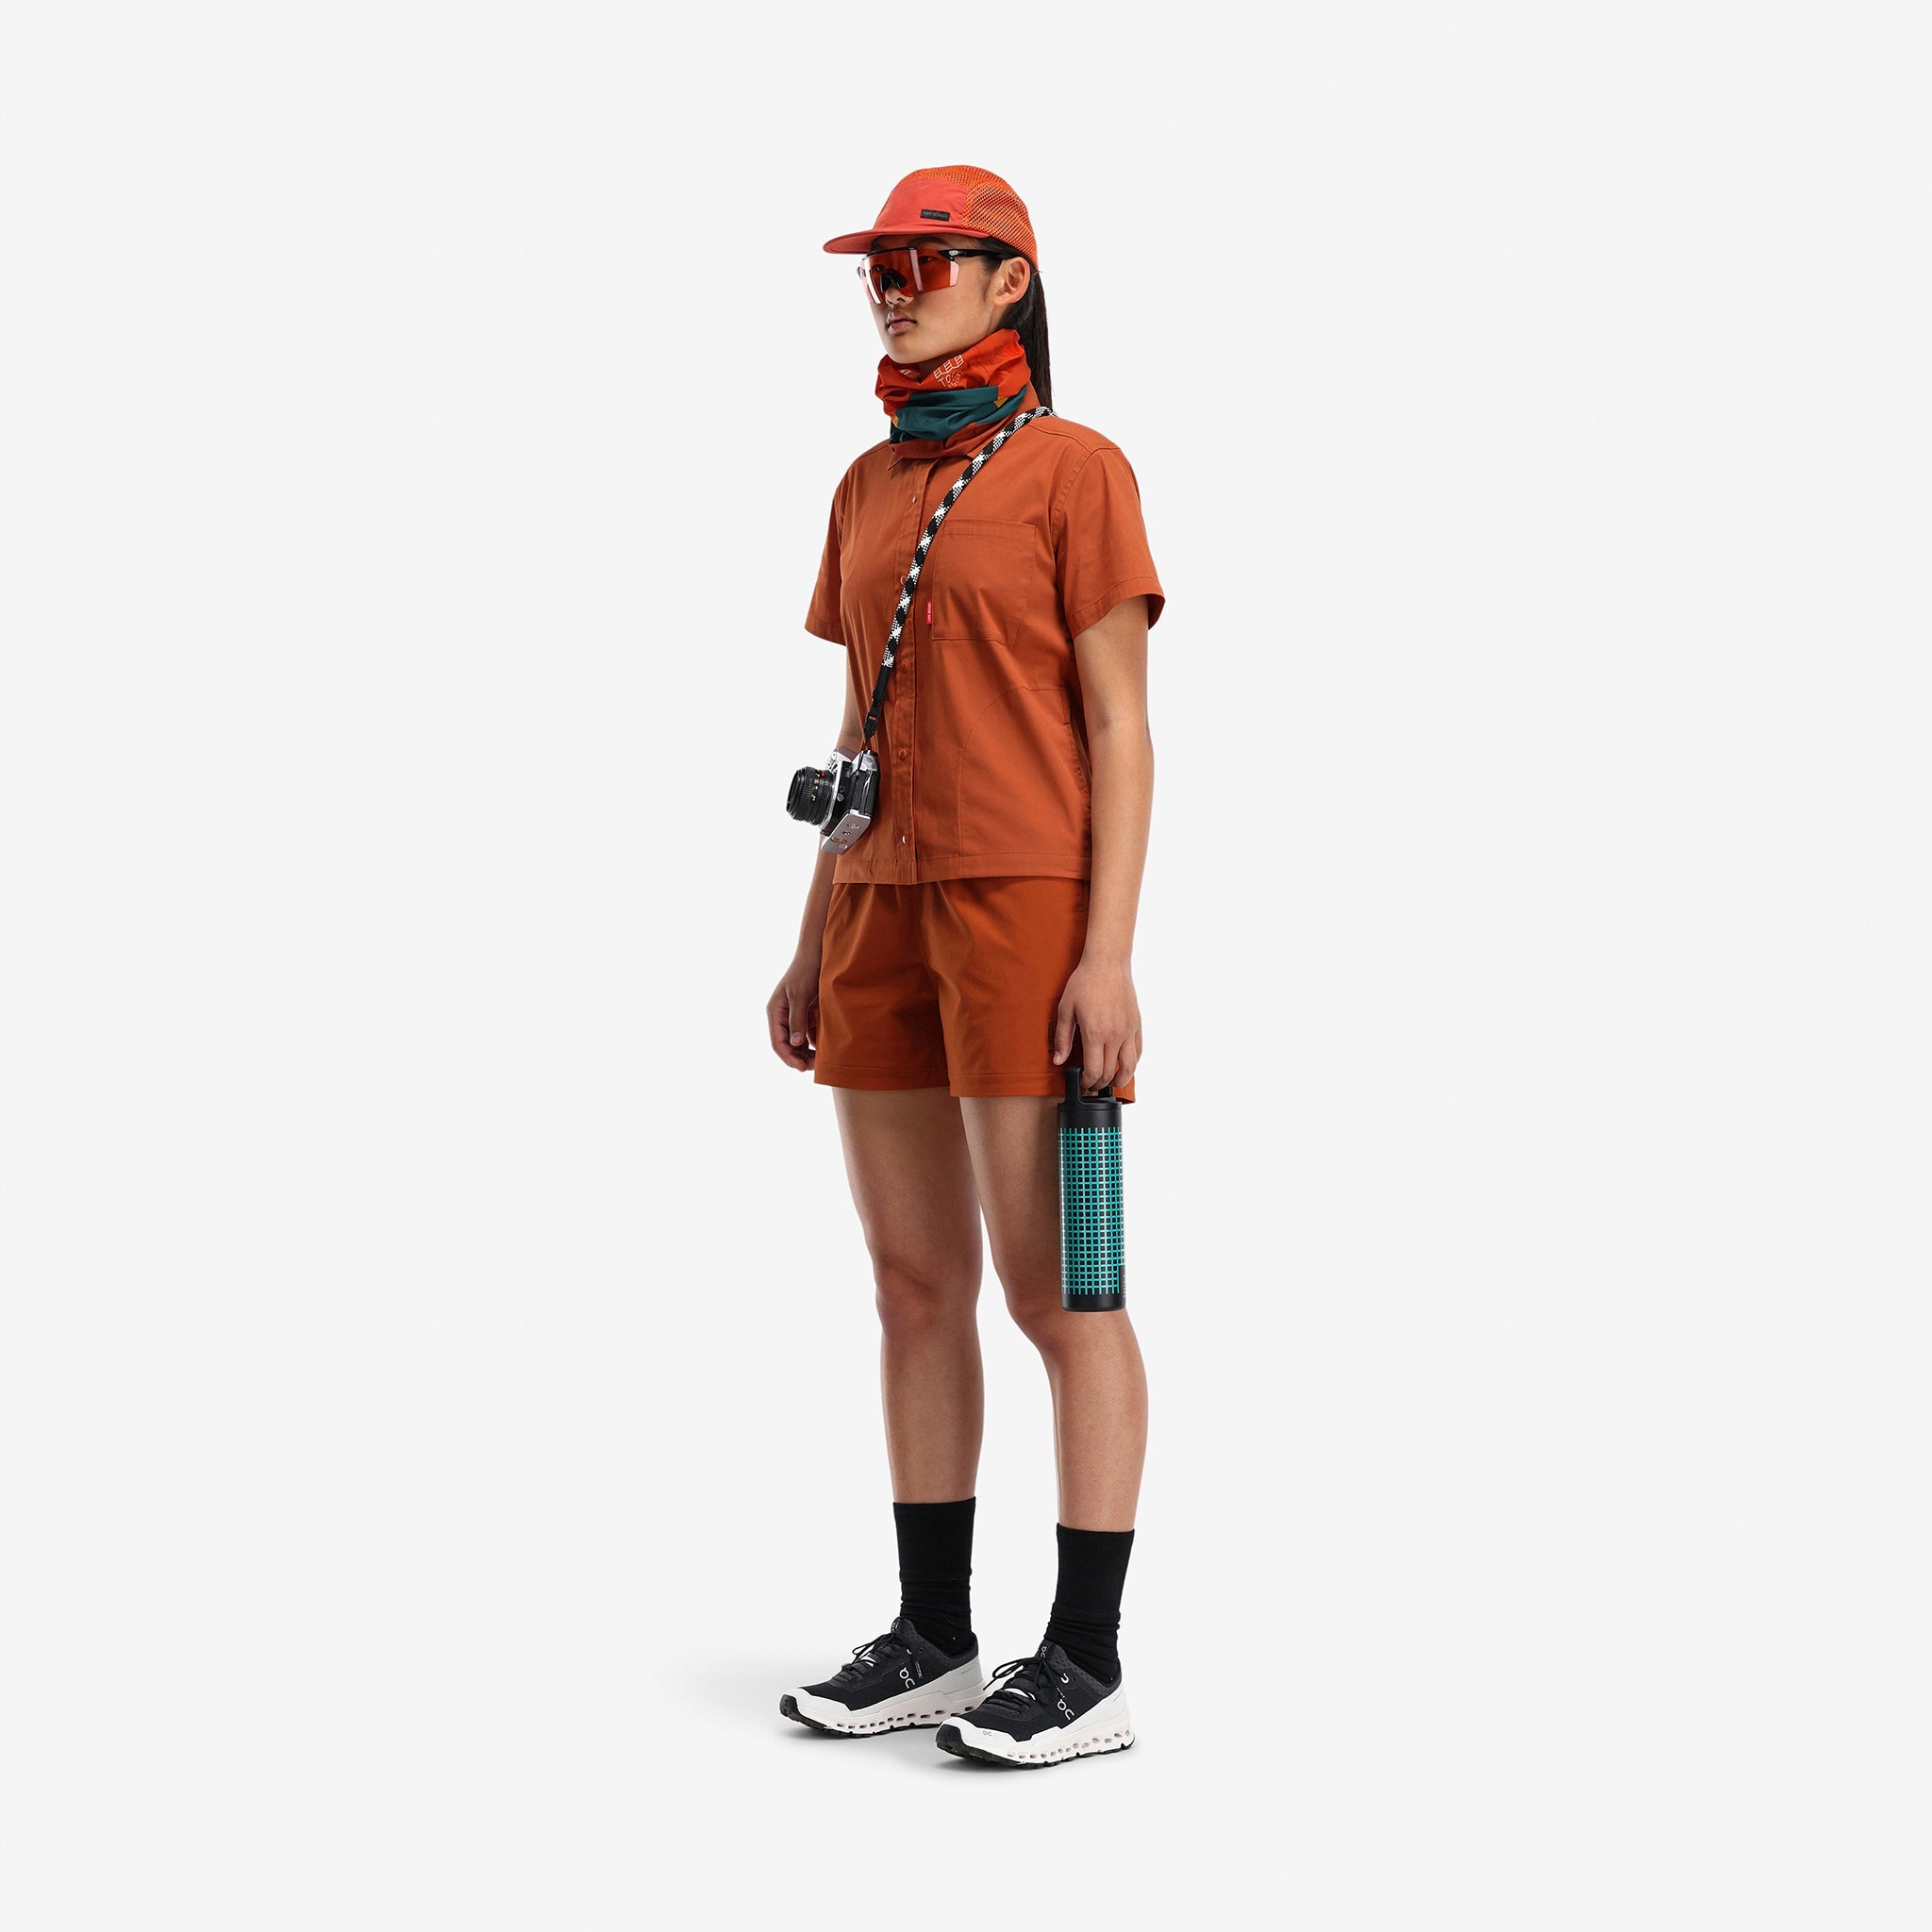 Model wearing Topo Designs Global mesh back Hat in "clay" orange. Unstructured 5-panel flexible brim packable hat.